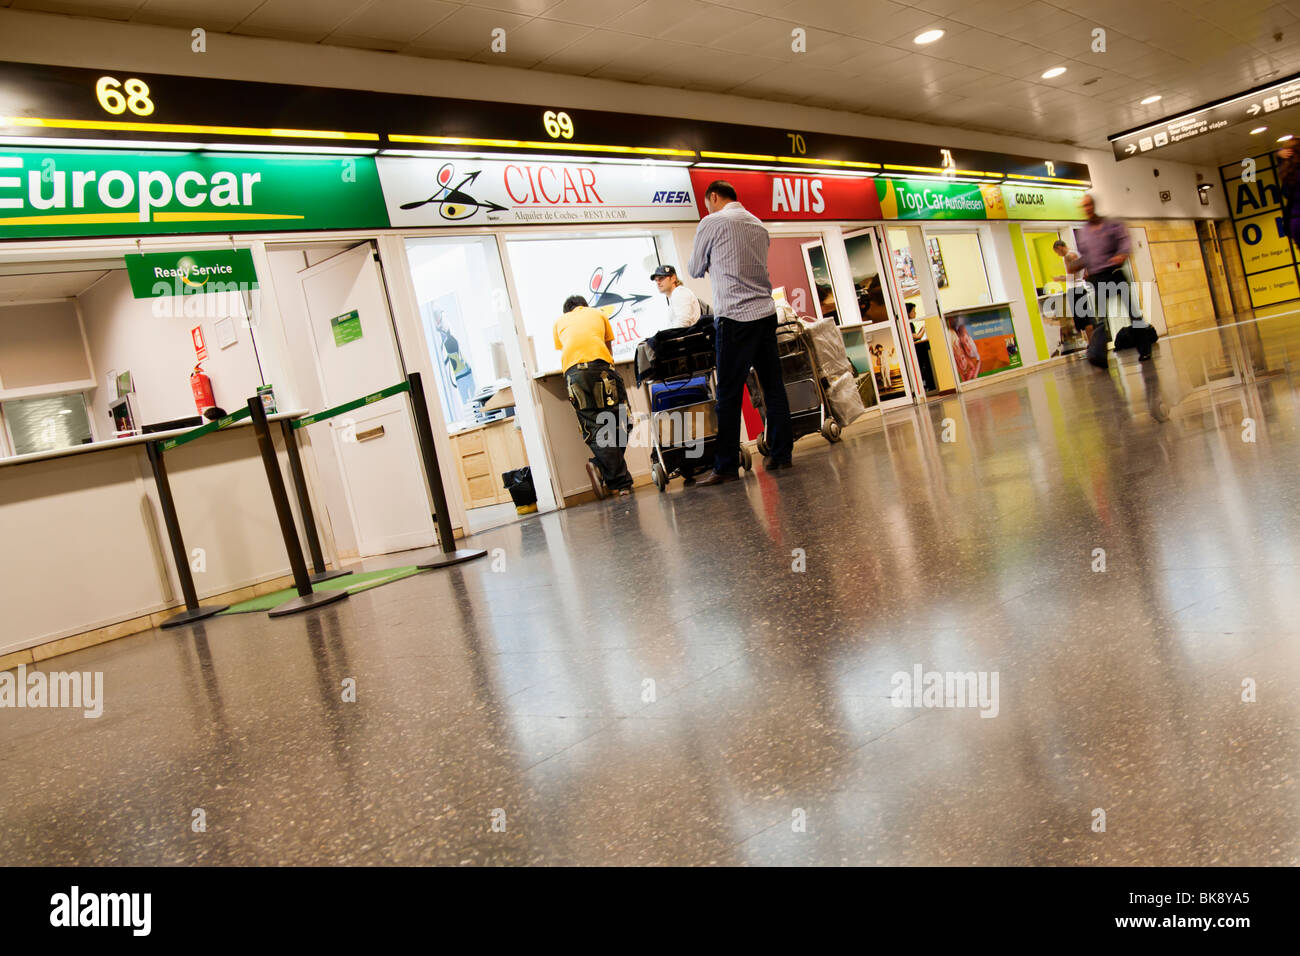 Airport car rental -Fotos und -Bildmaterial in hoher Auflösung – Alamy